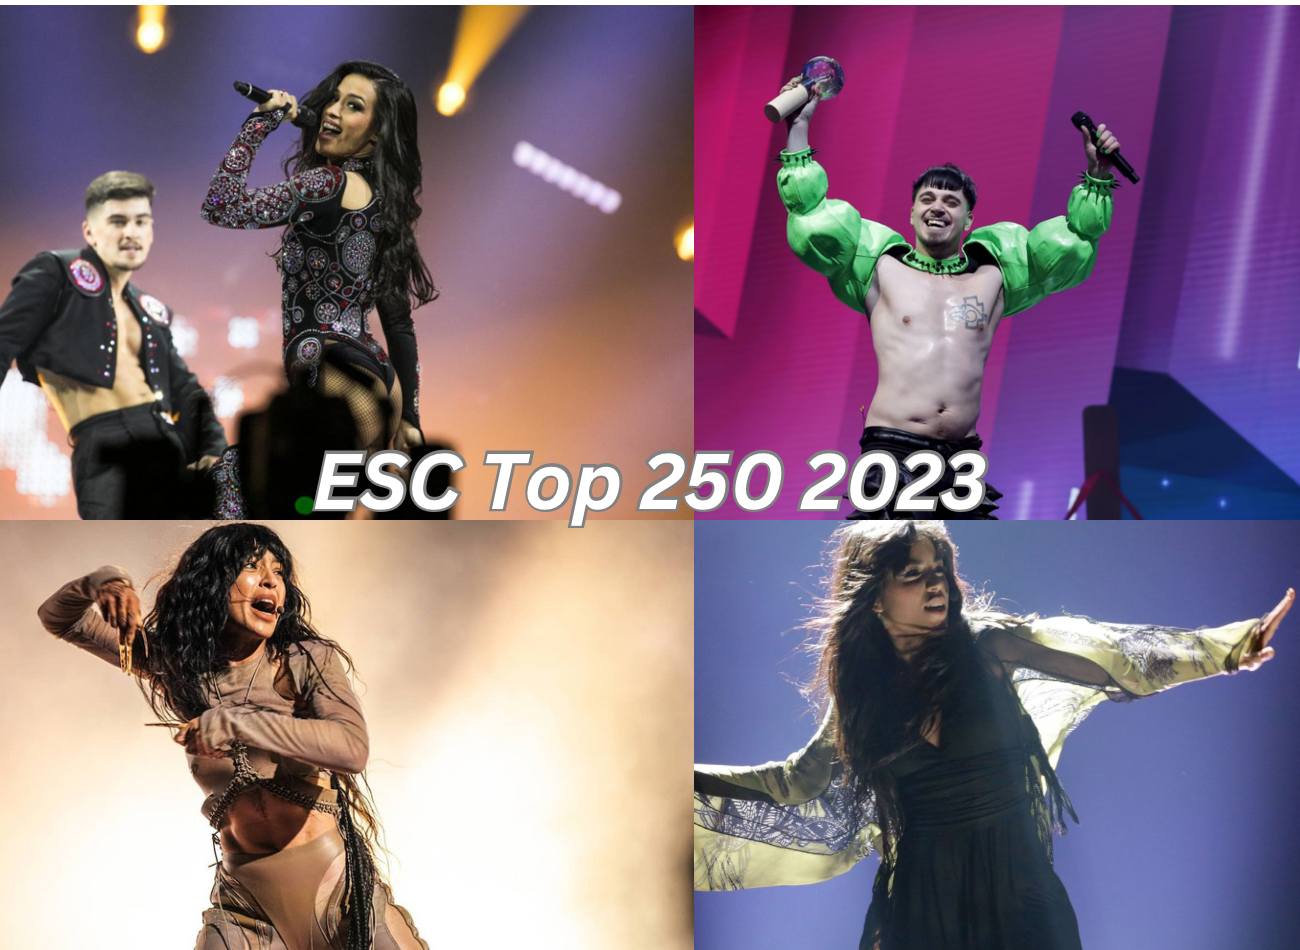 ESC Top 250 2023 – Ανακοινώθηκε η λίστα – Σαρωτική πρωτιά για τον Käärijä και το “Cha Cha Cha”